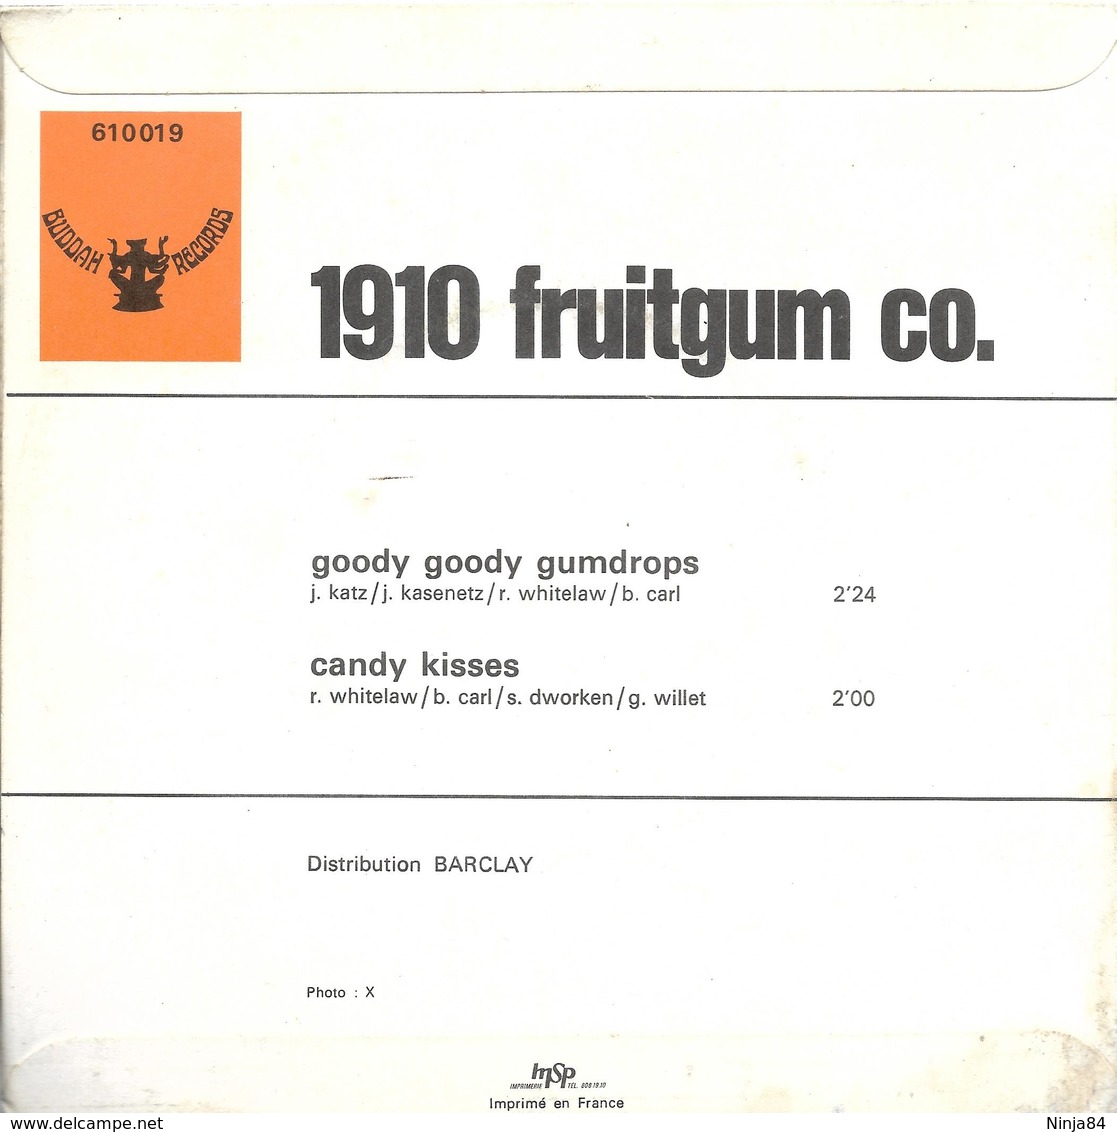 SP 45 RPM (7")  1910 Fruitgum Company  "  Goody Goody Gumdrops  " - Rock